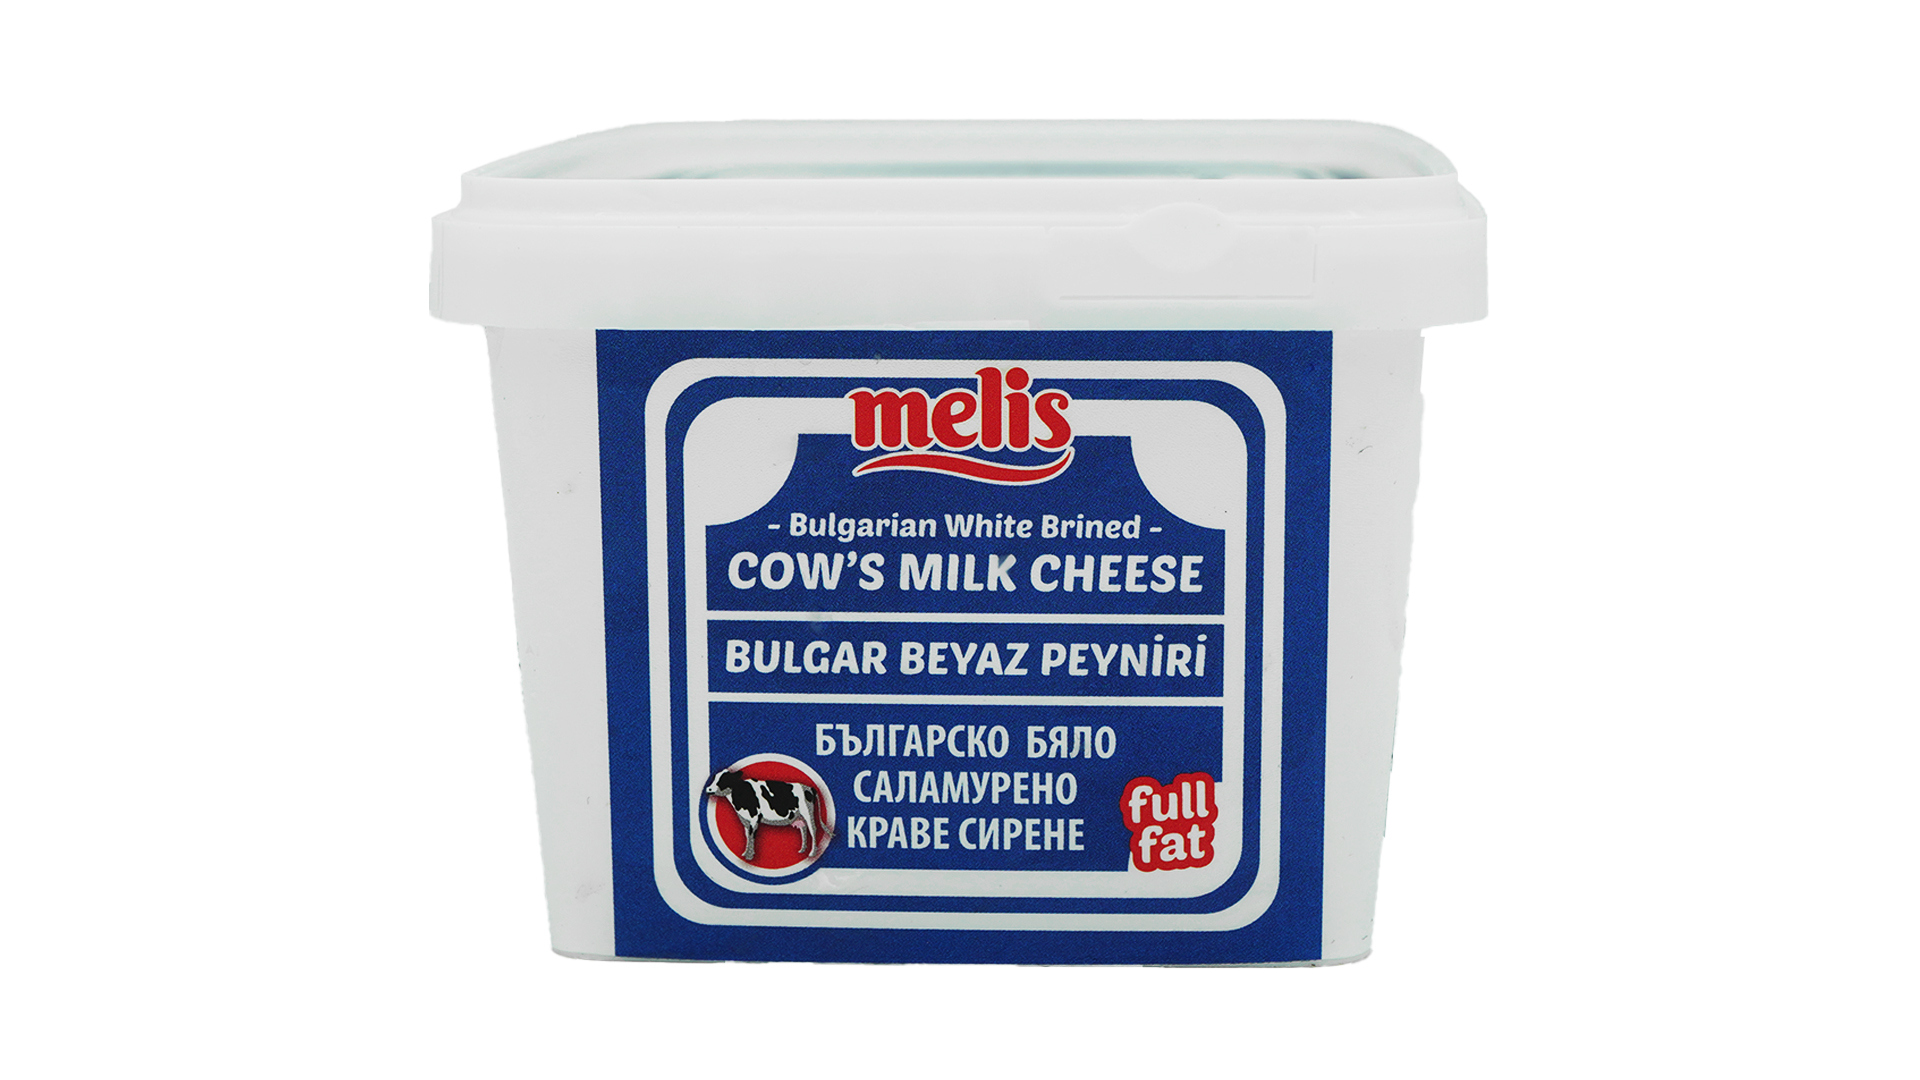 Melis bulgarian cows milk cheese 400g 5